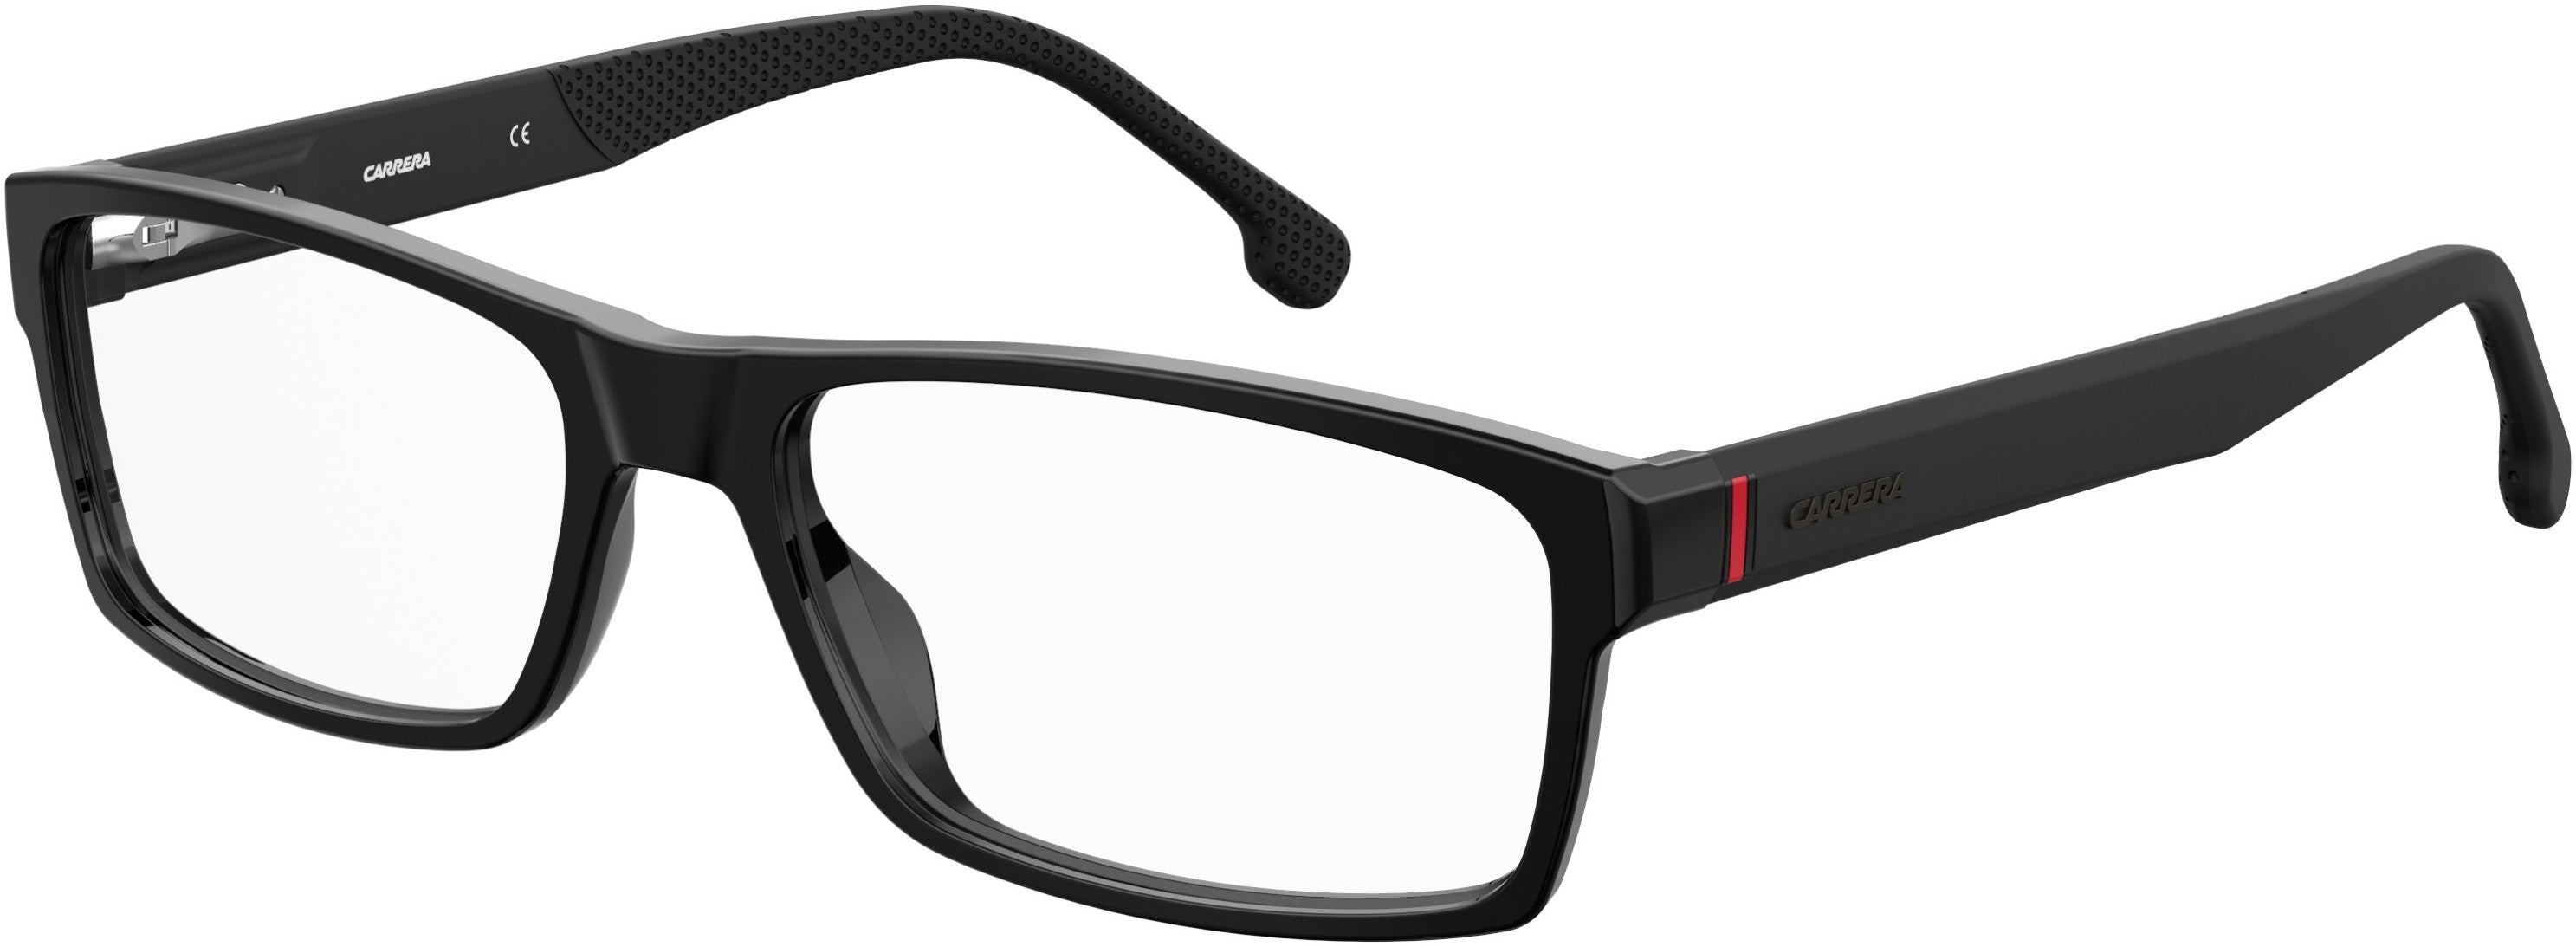  Carrera 8852 Rectangular Eyeglasses 0807-0807  Black (00 Demo Lens)